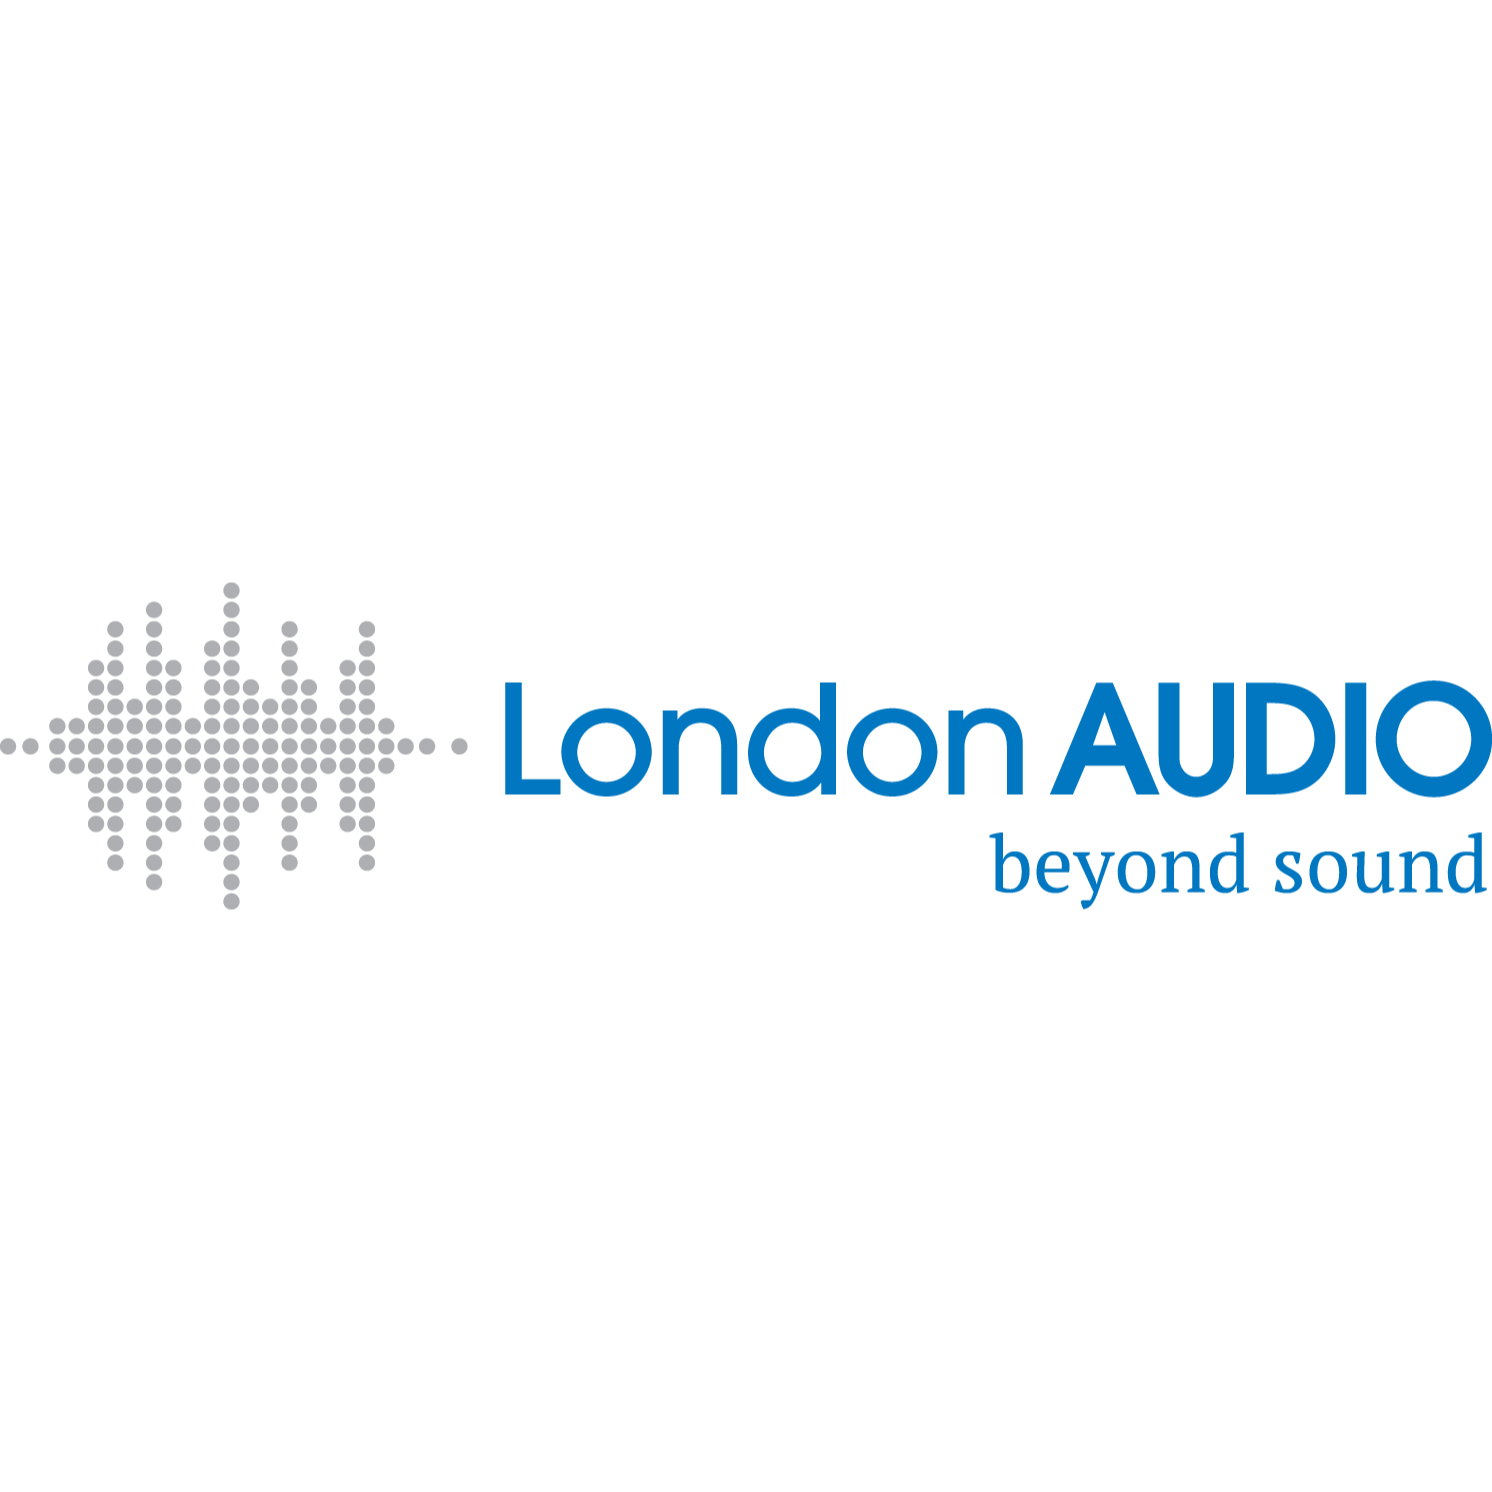 London Audio - Audiovisual Equipment & Supplies